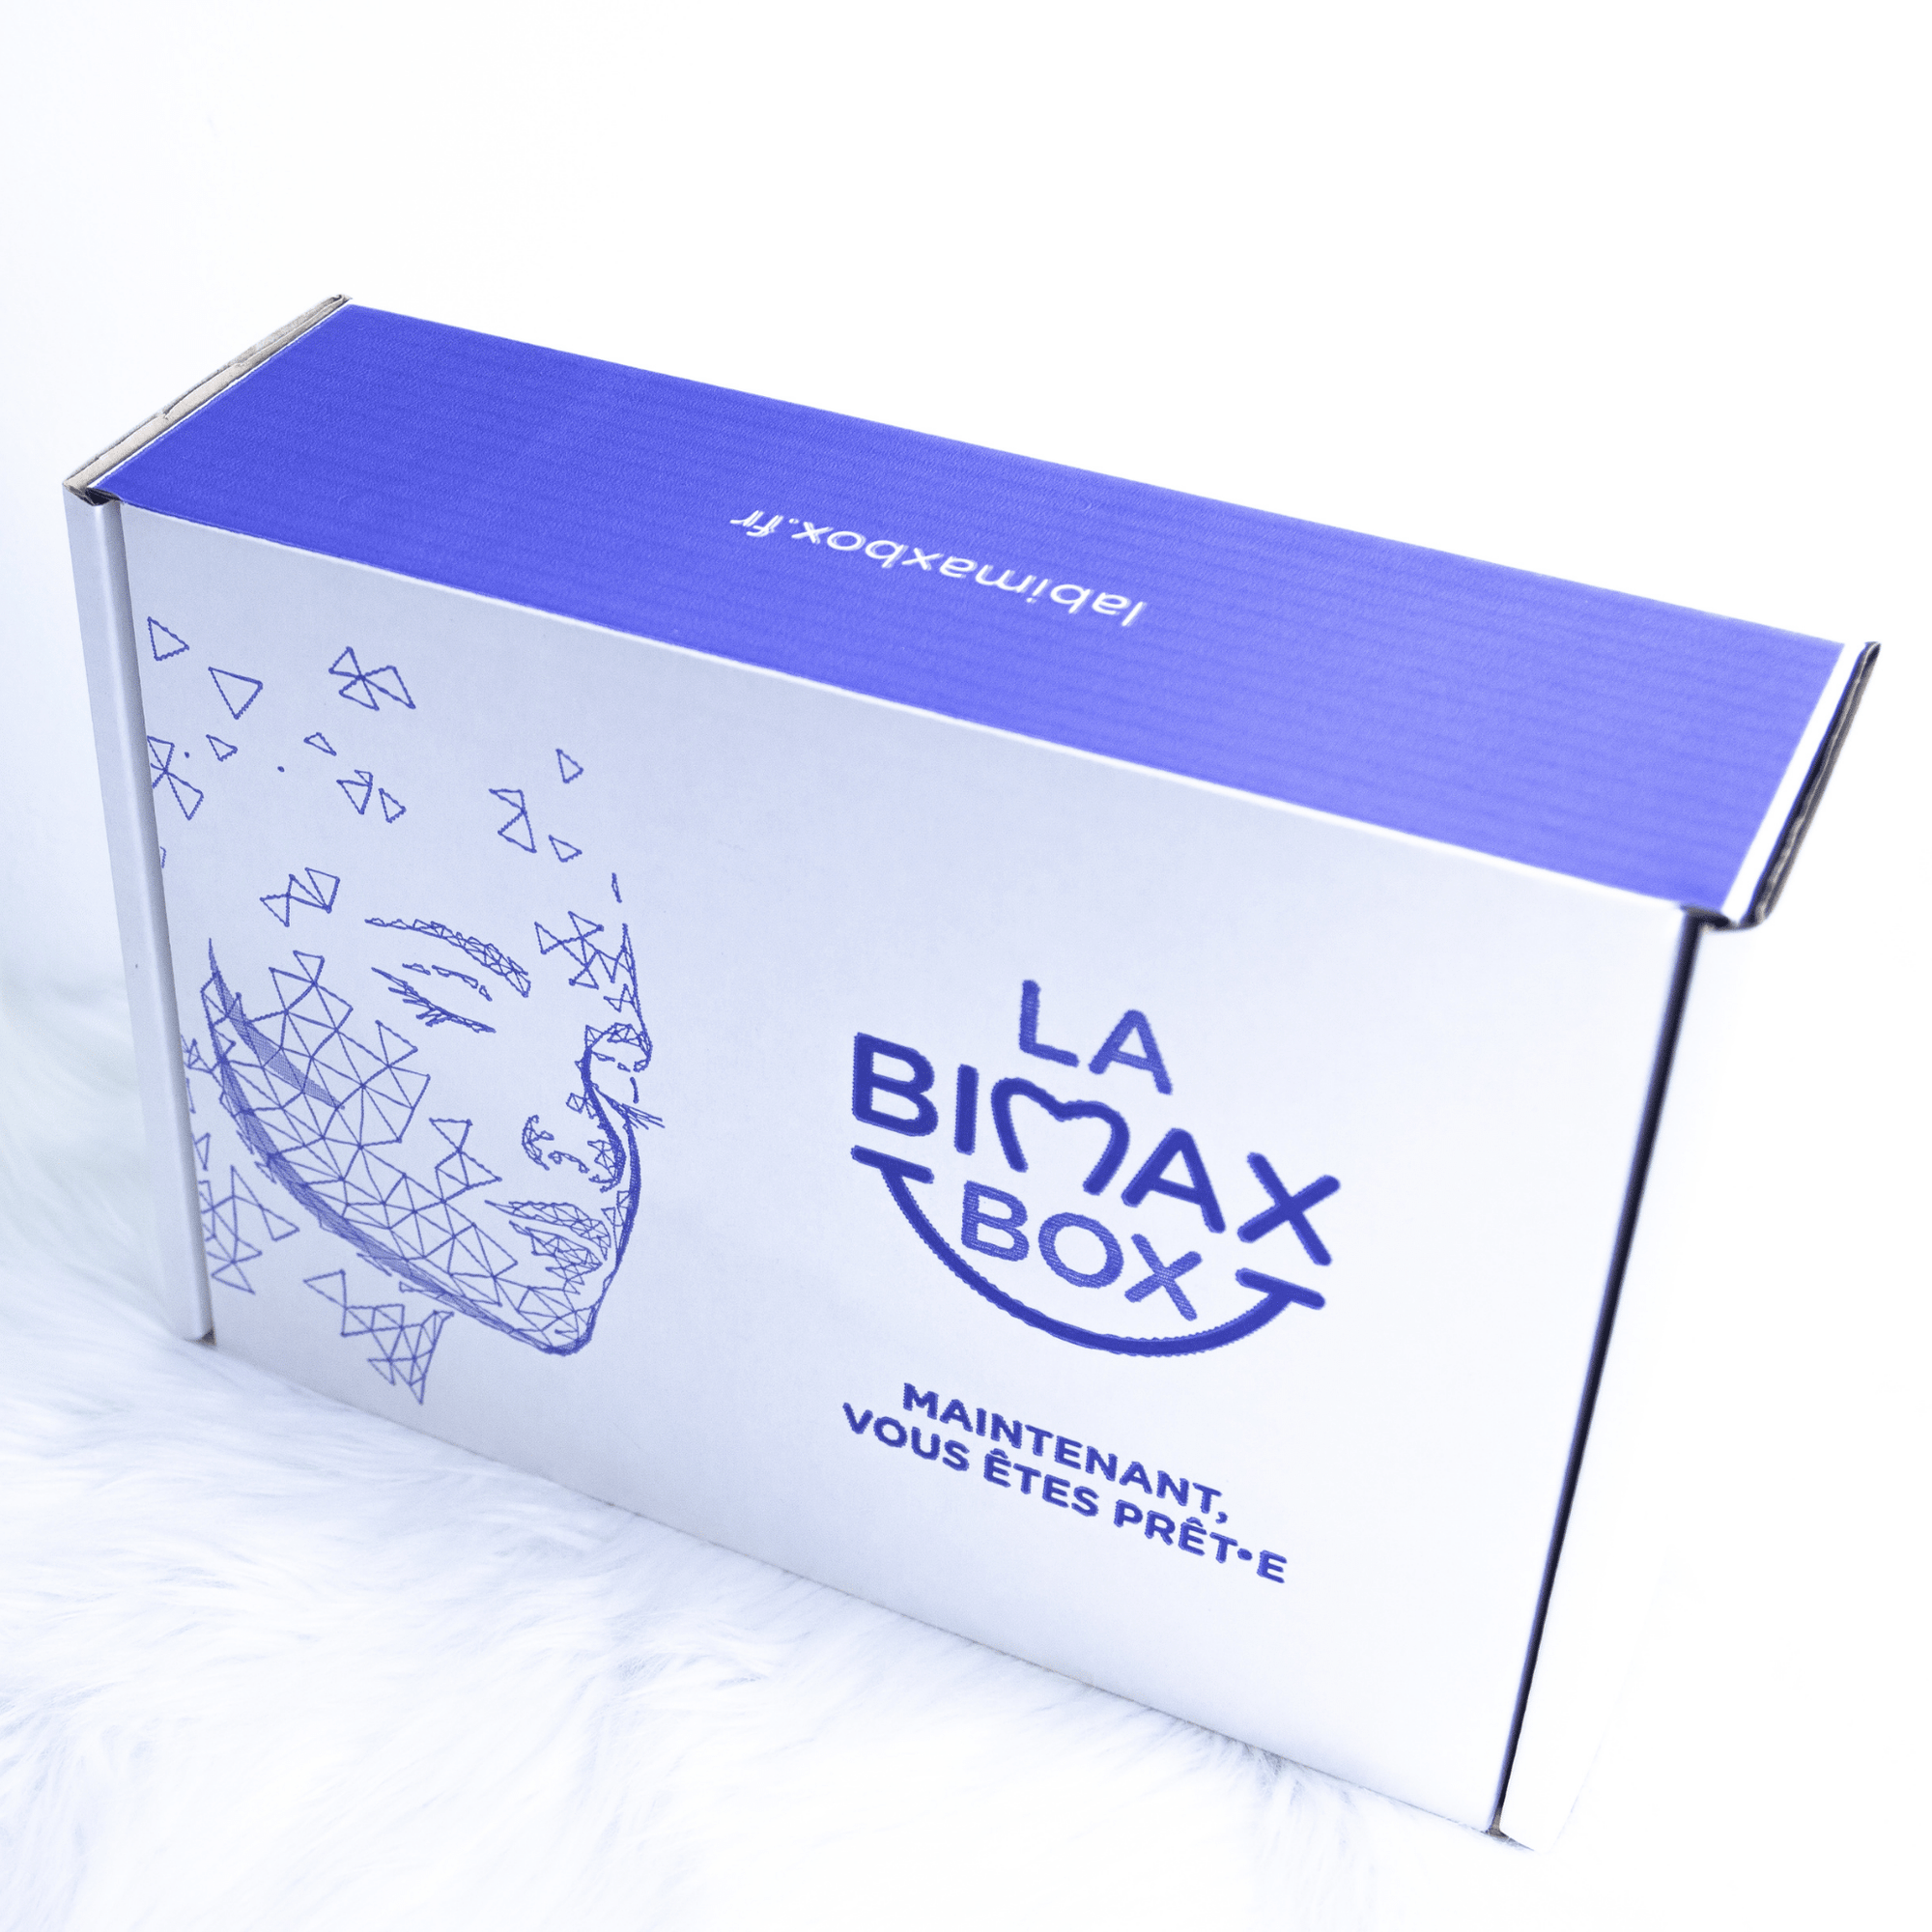 opération maxillo-facial convalescence, La Bimax Box 